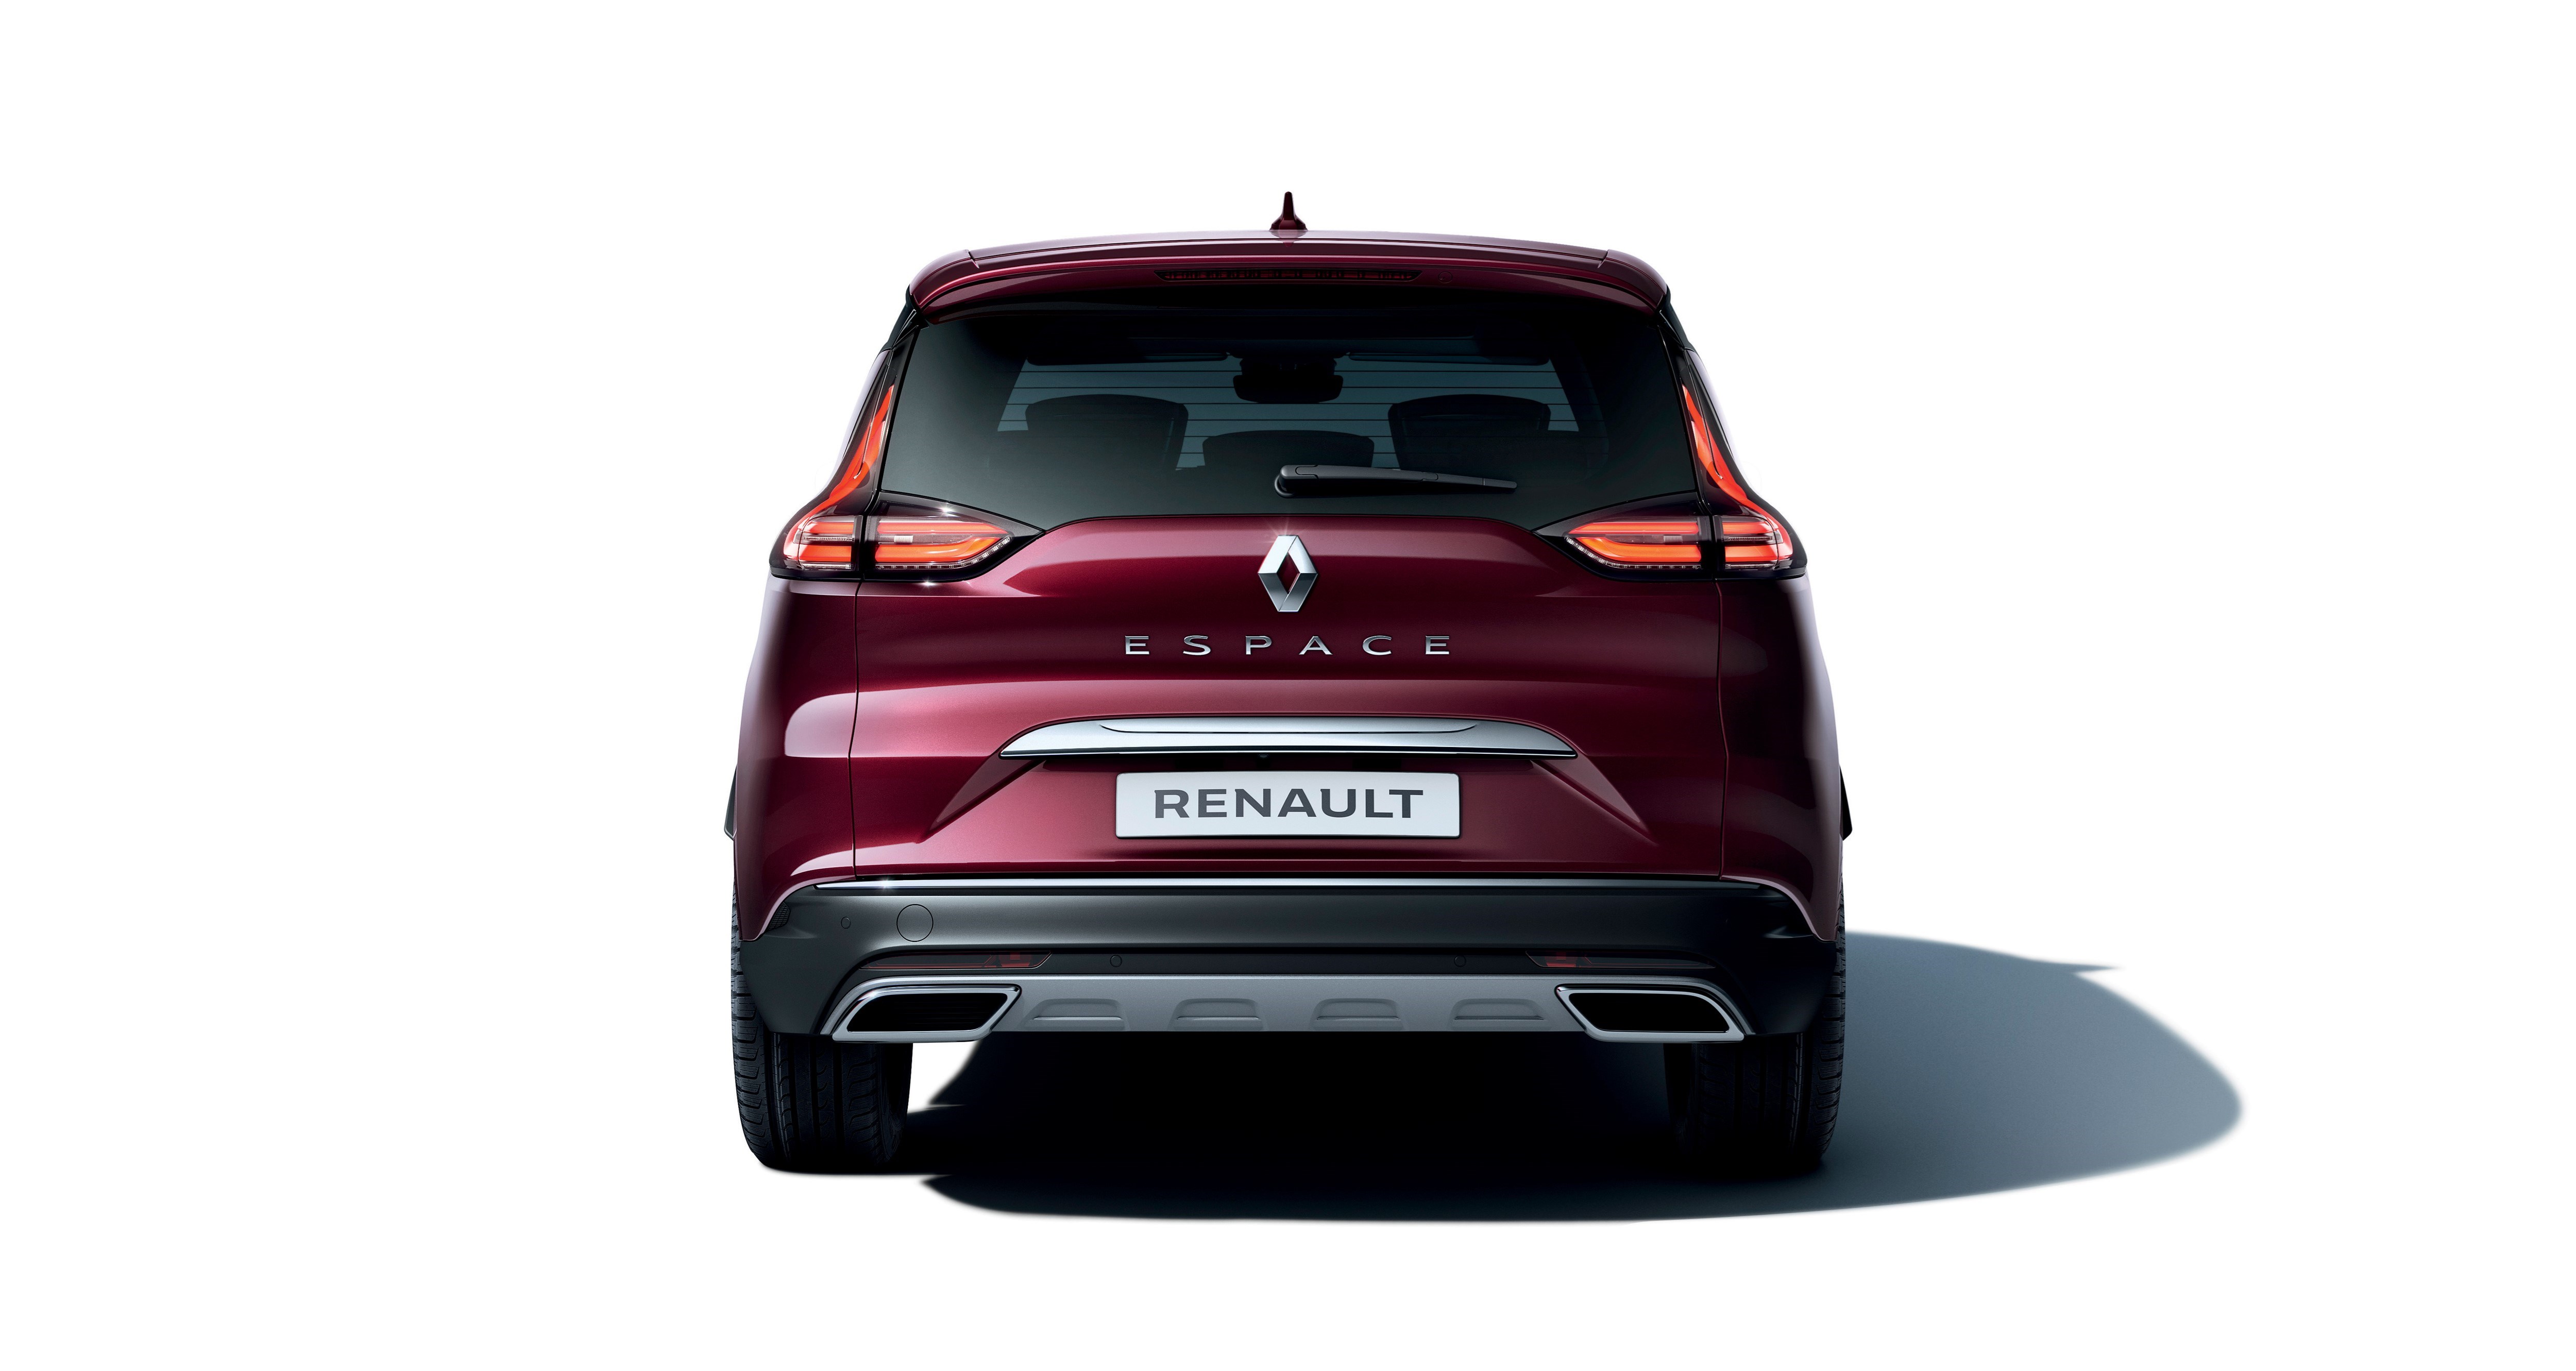 Renault Espace exterior big